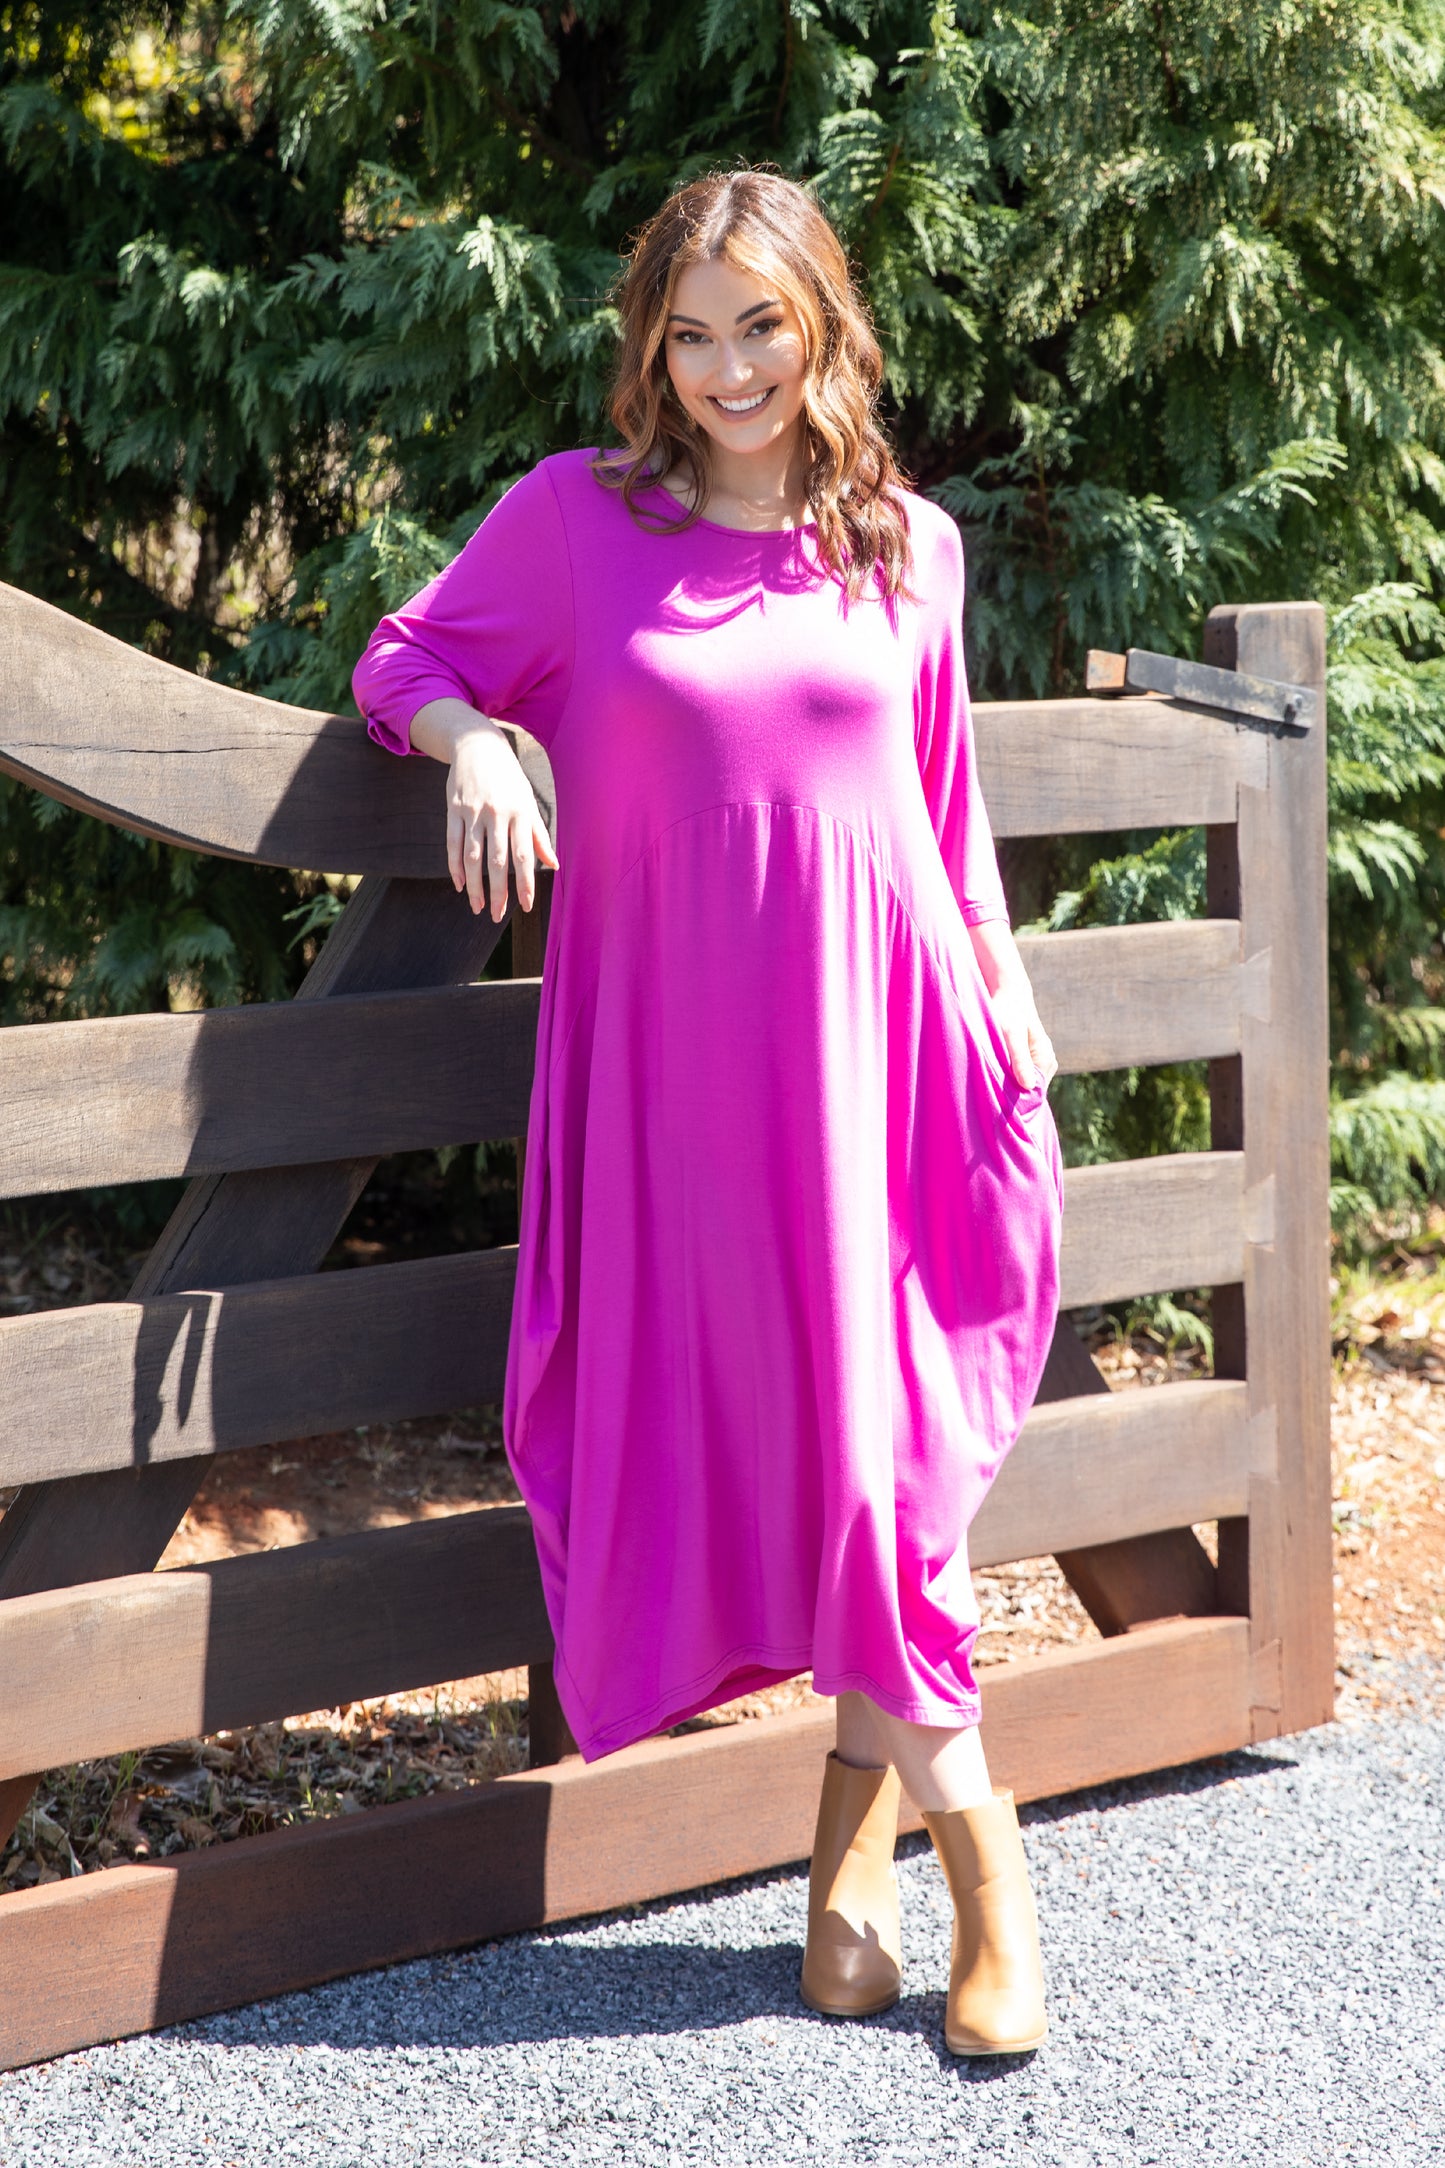 Alviva Dress in Plum Pink